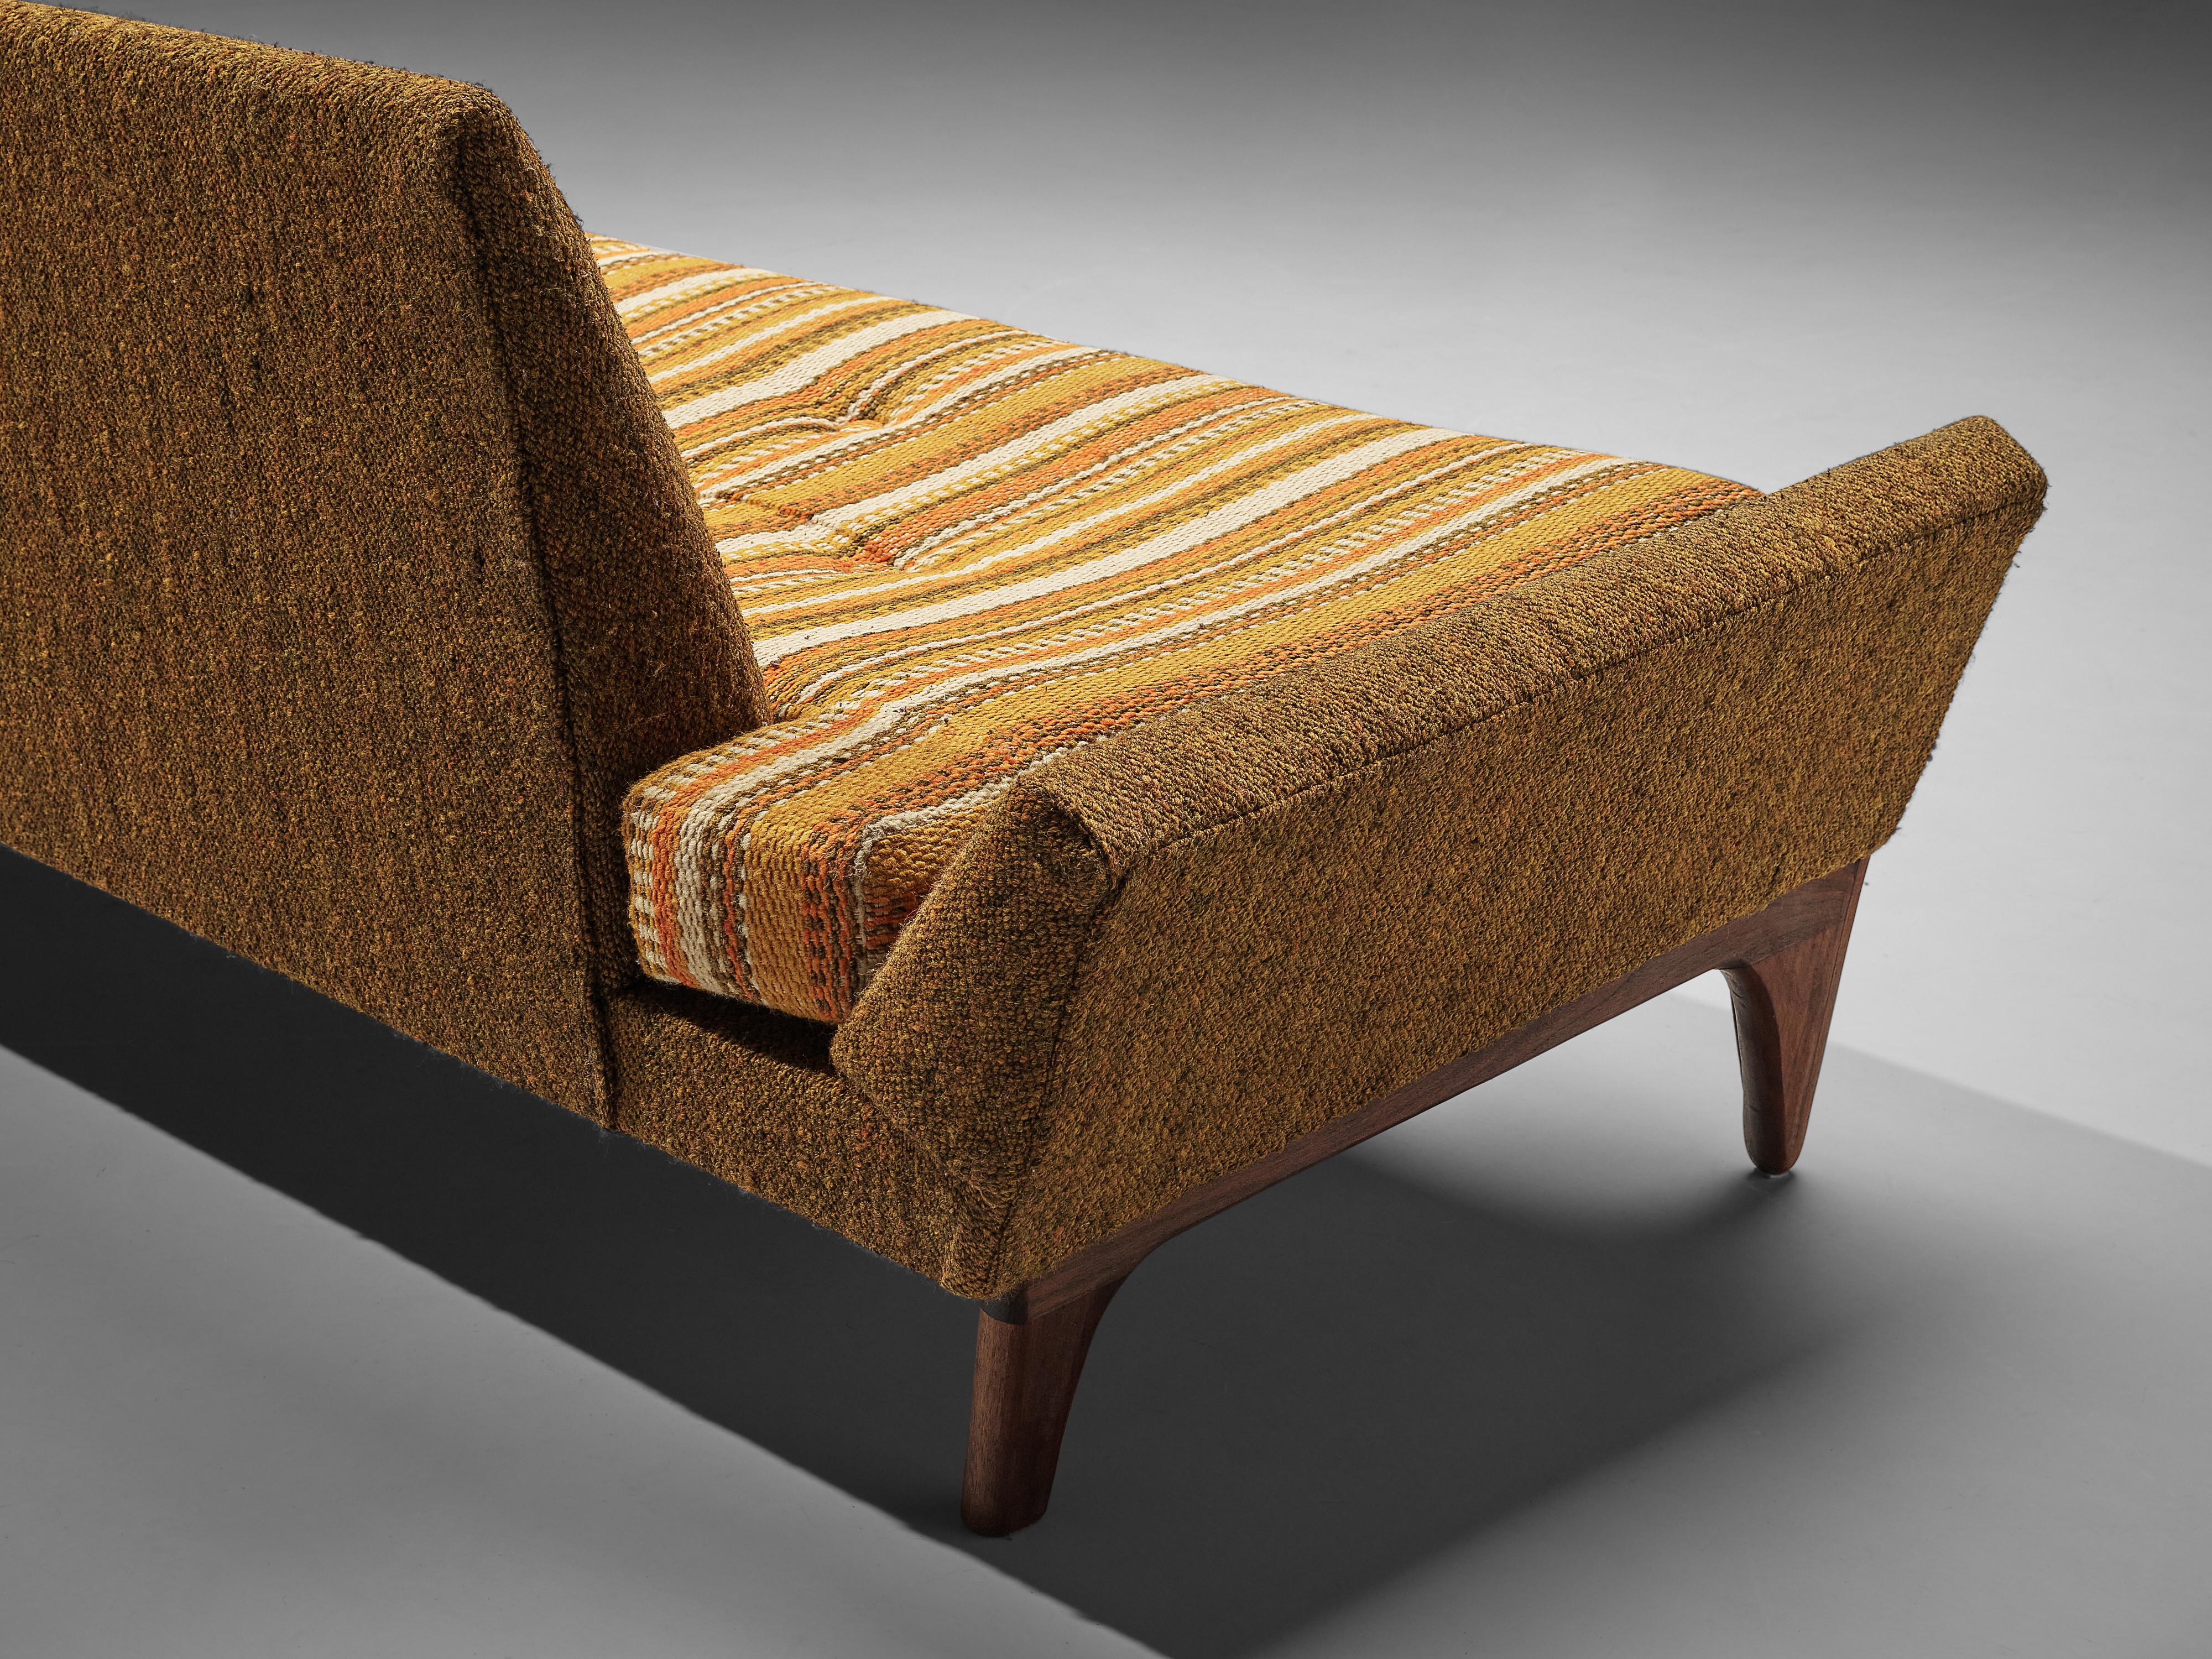 Walnut Adrian Pearsall Sofa in Ocher Yellow Striped Upholstery